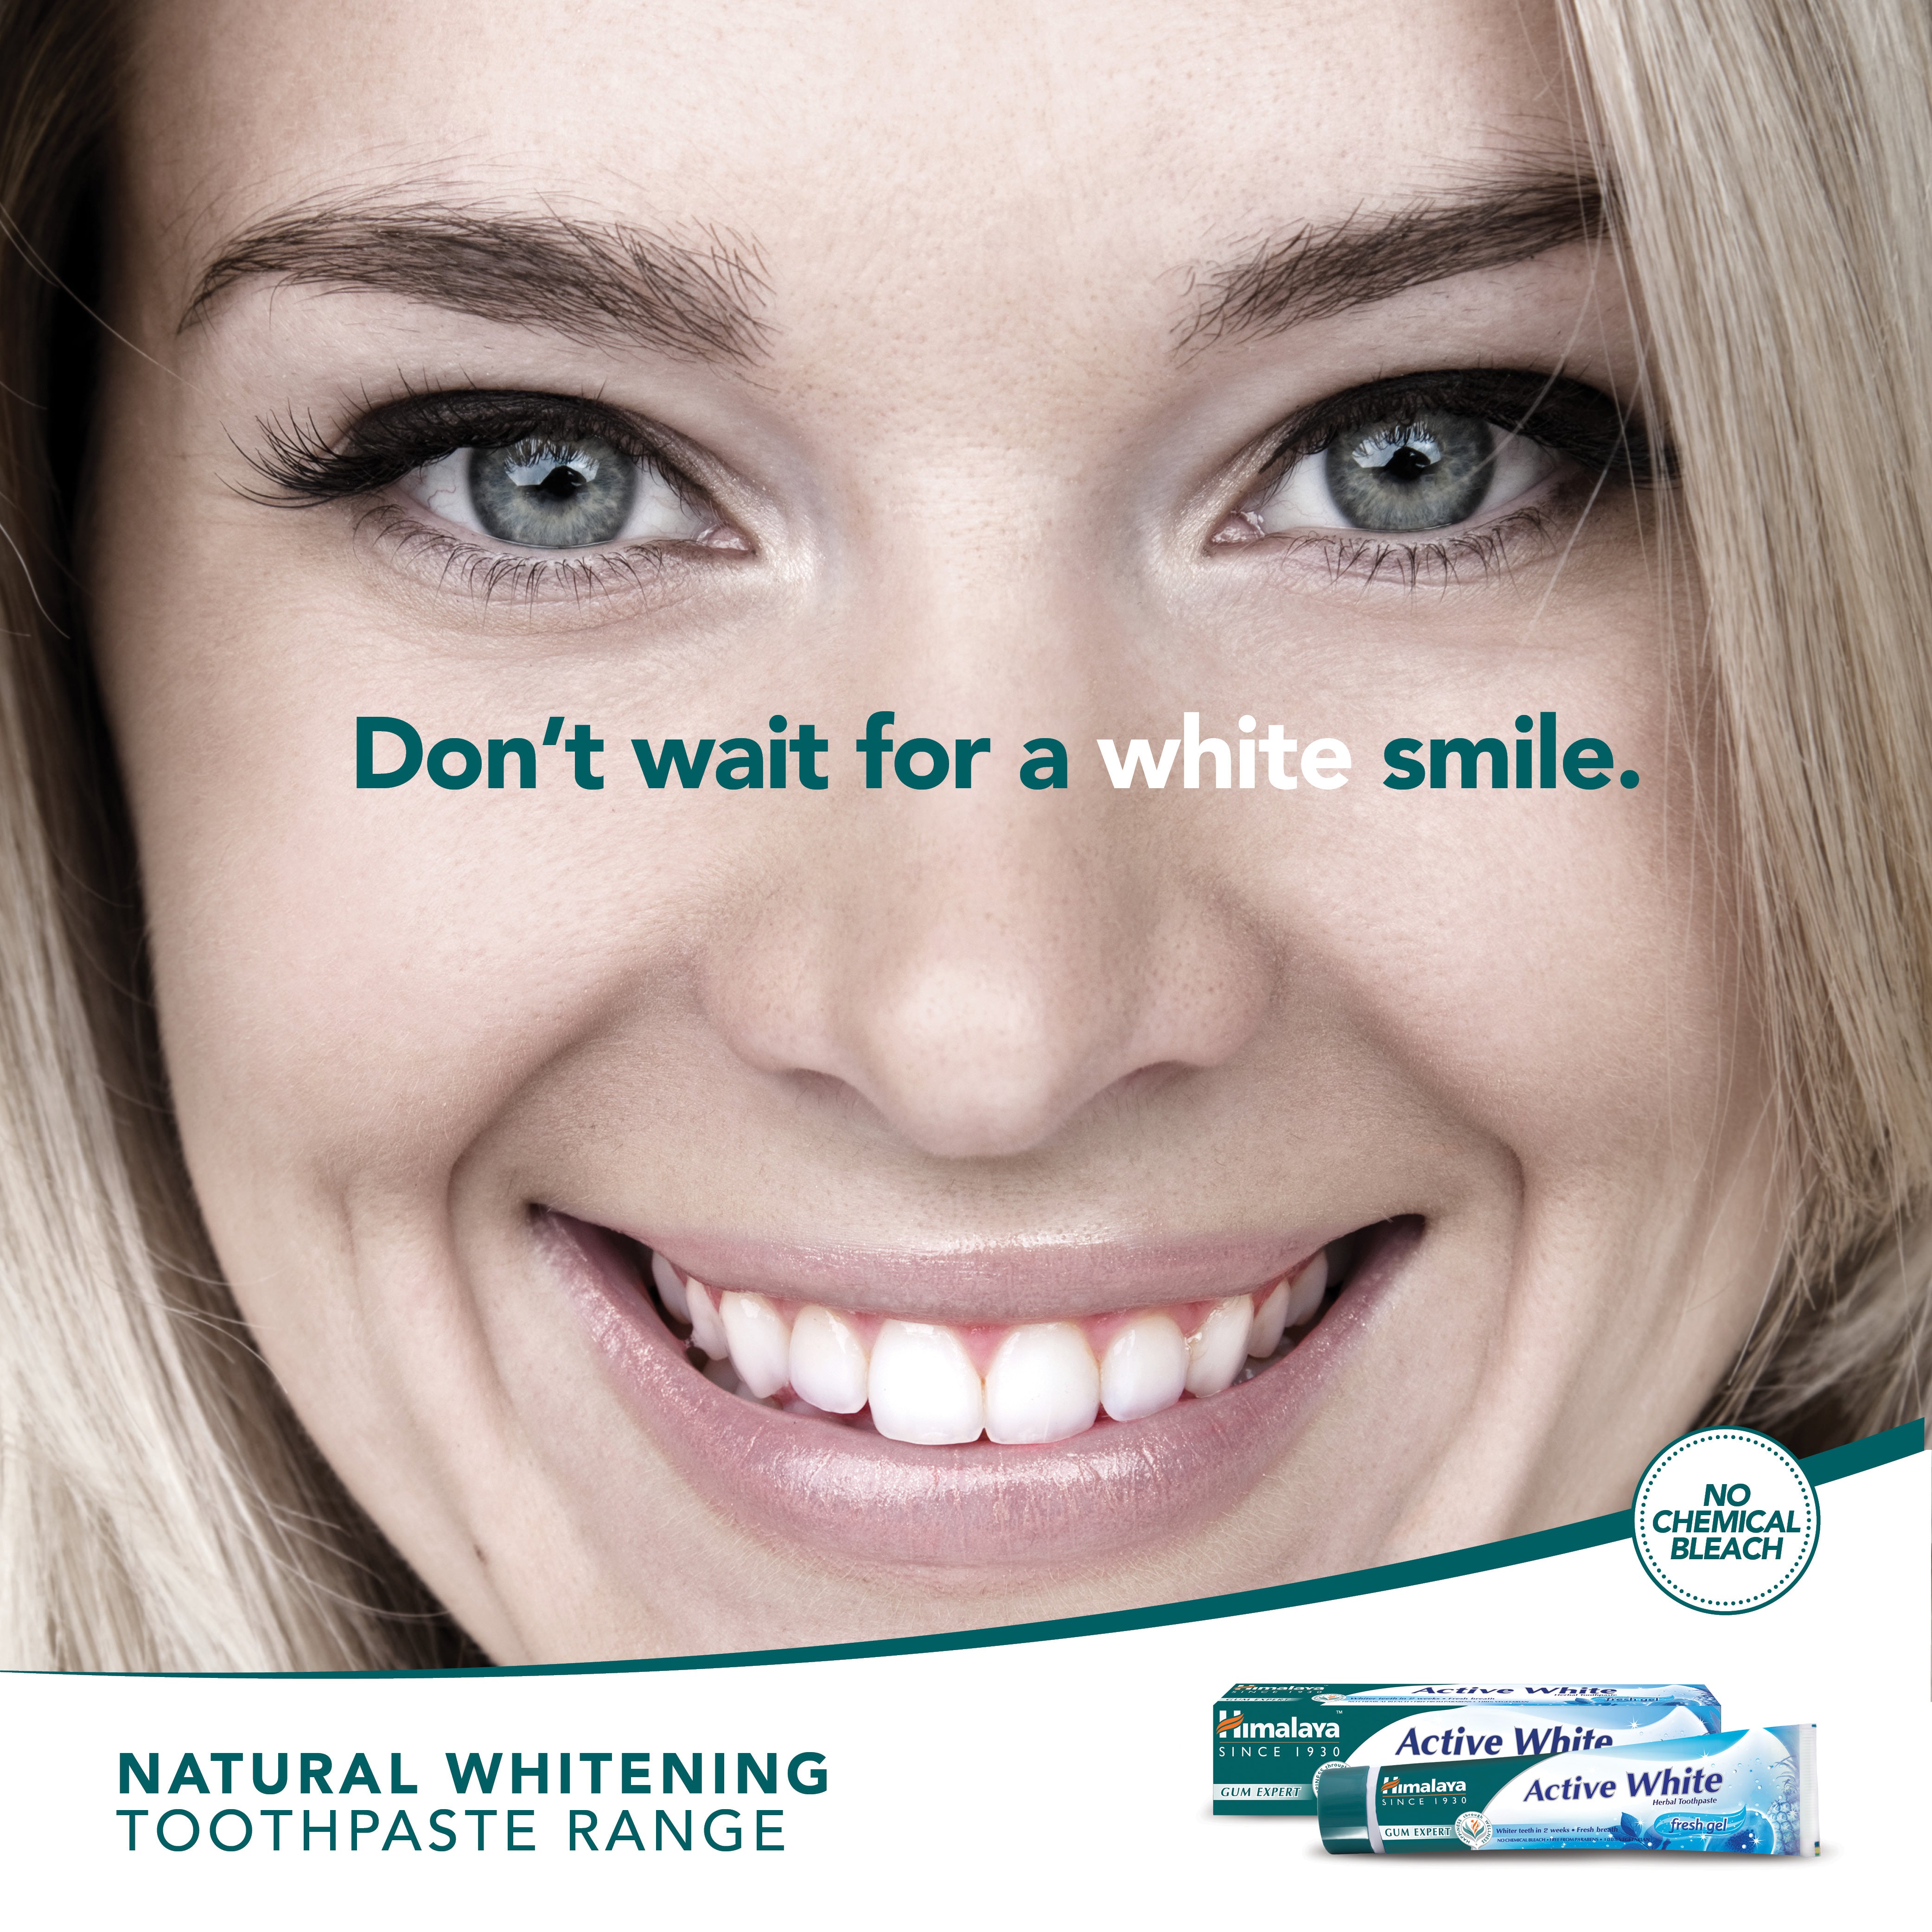 Himalaya Gum Expert Herbal Toothpaste - Active White Fresh Gel - 75ml (Pack of 3)